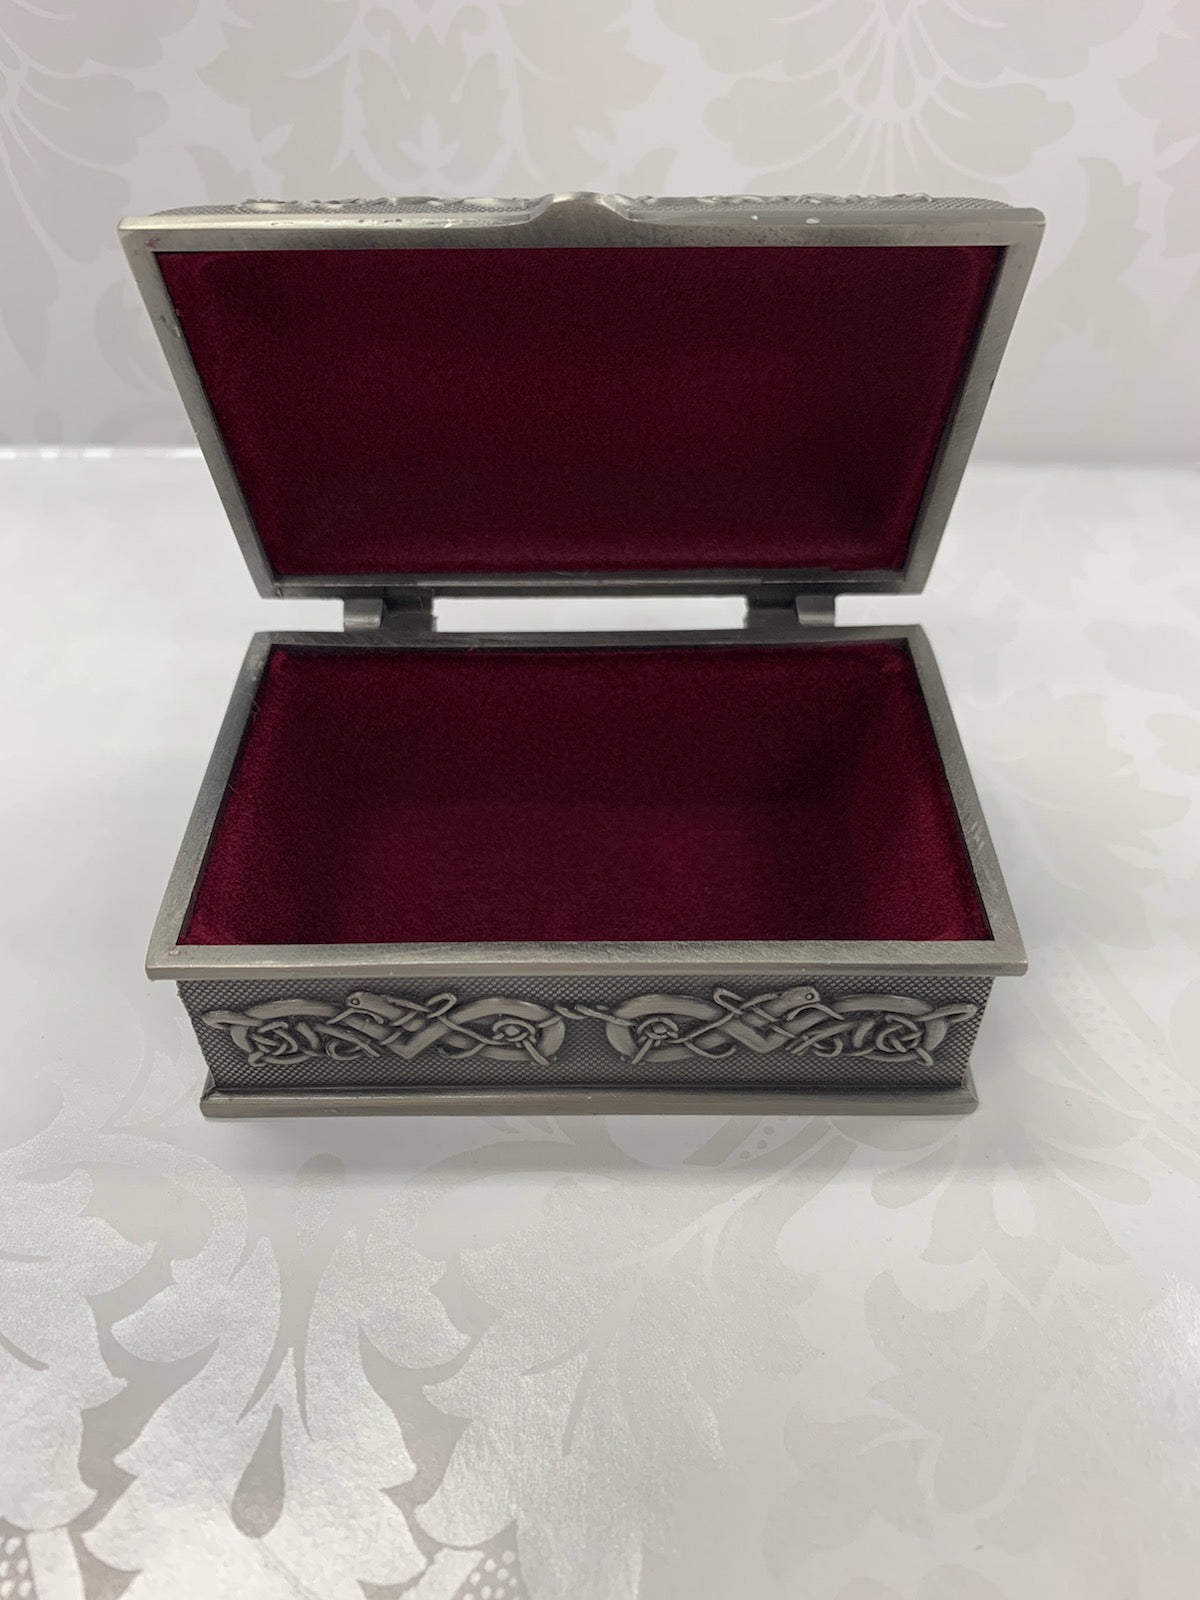 Mullingar Pewter Jewelry Box - Small Md17s